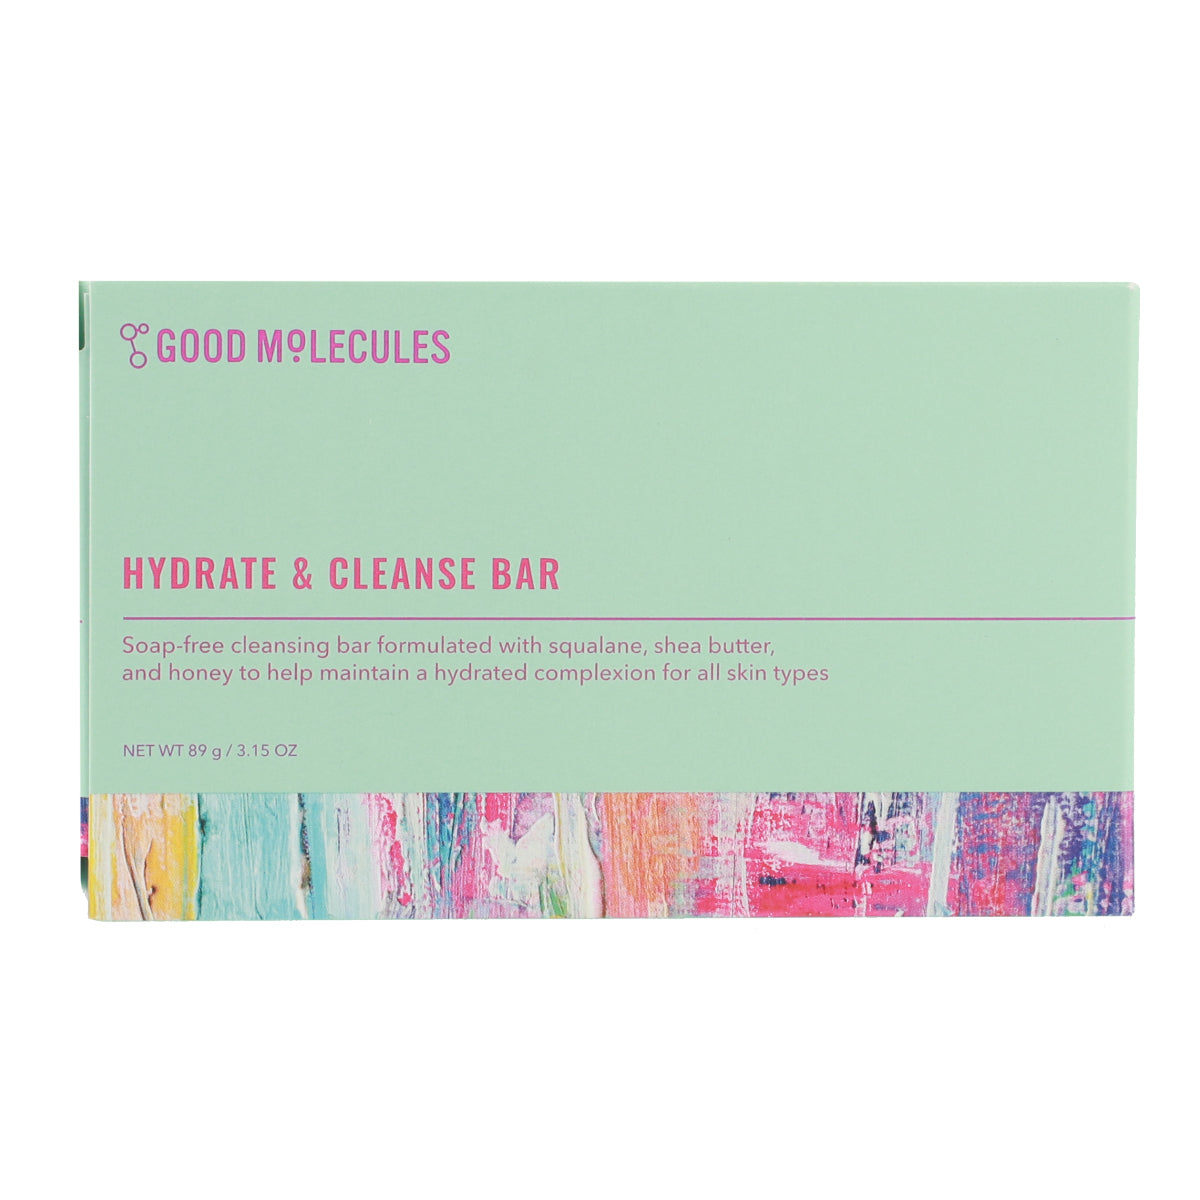 Hydrate & Cleanse Bar